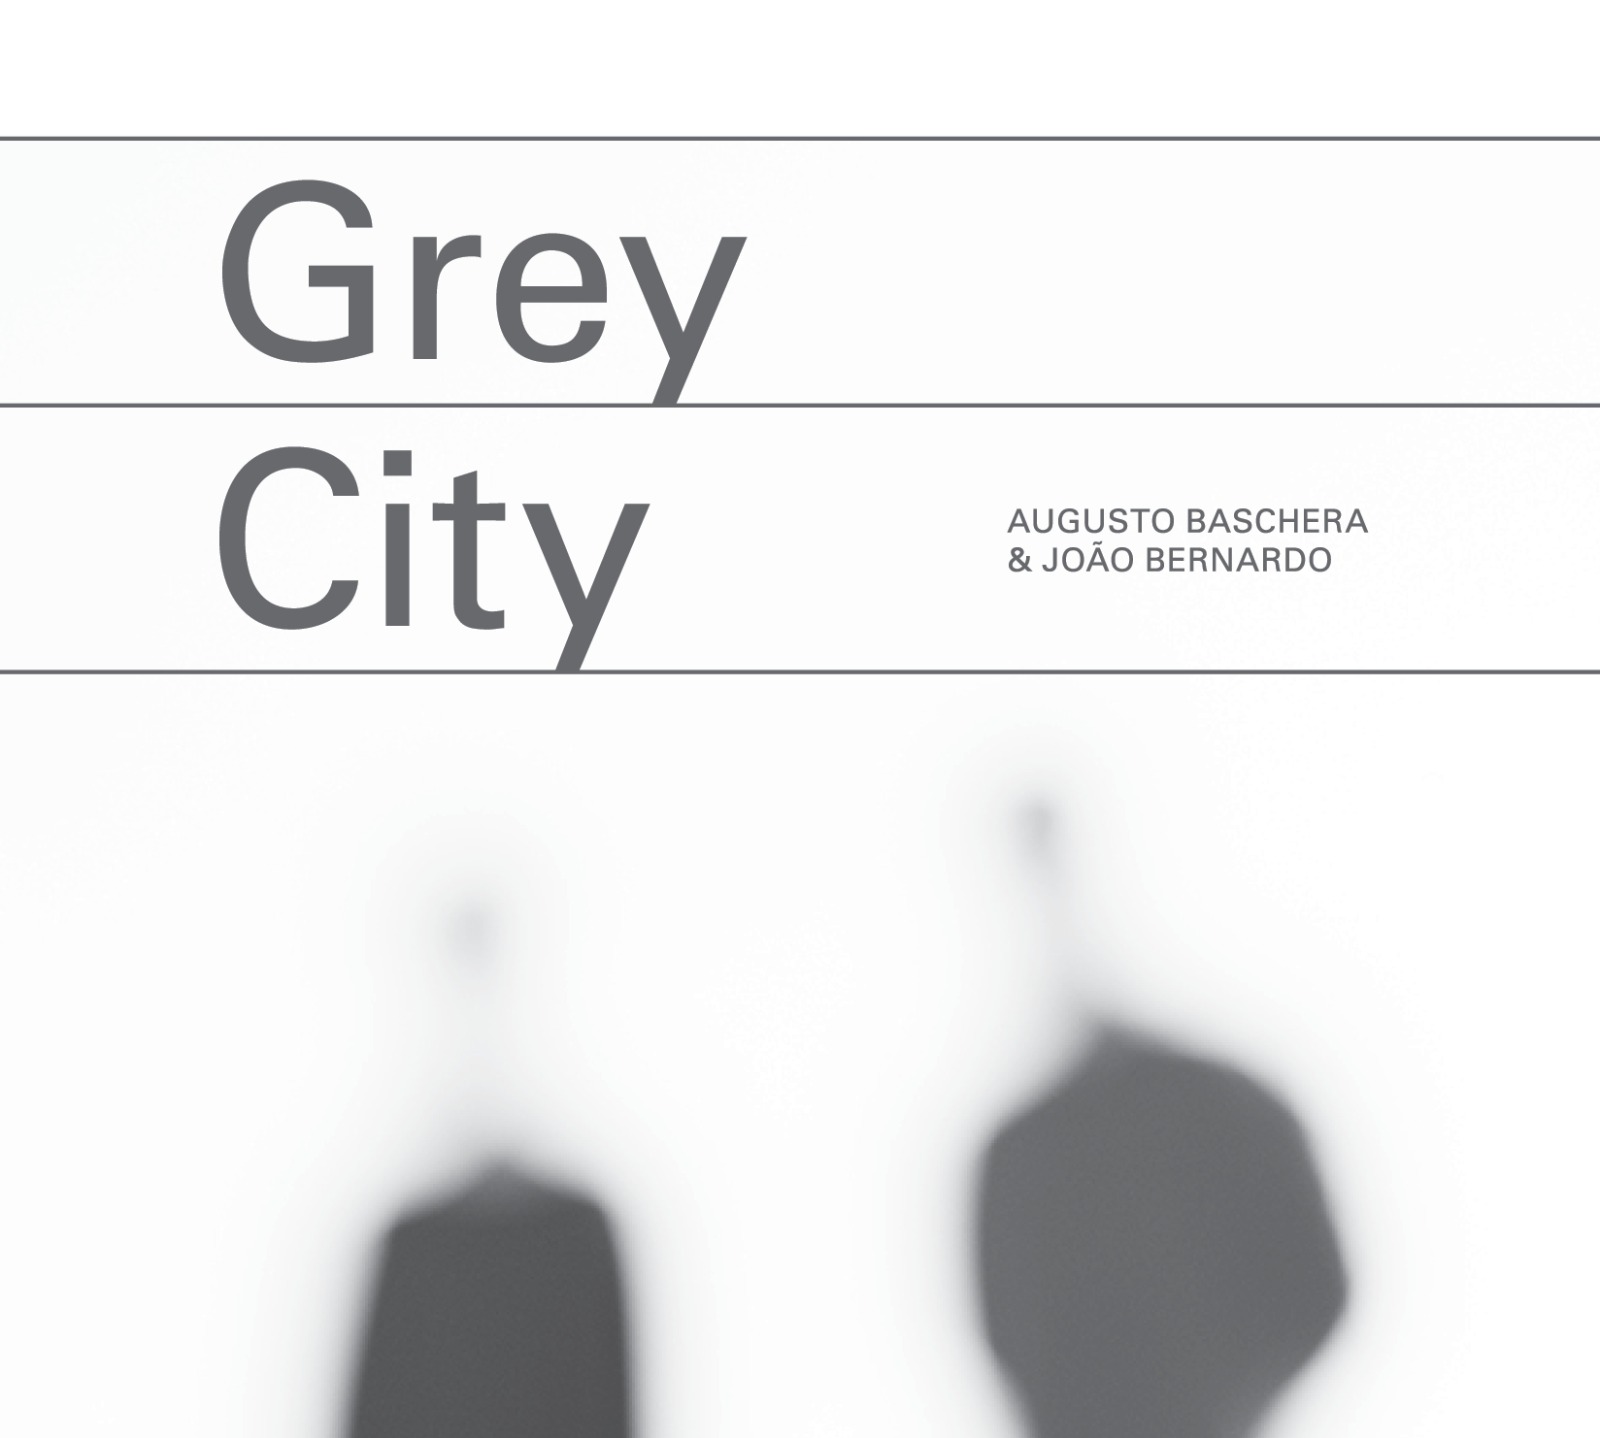 Grey City